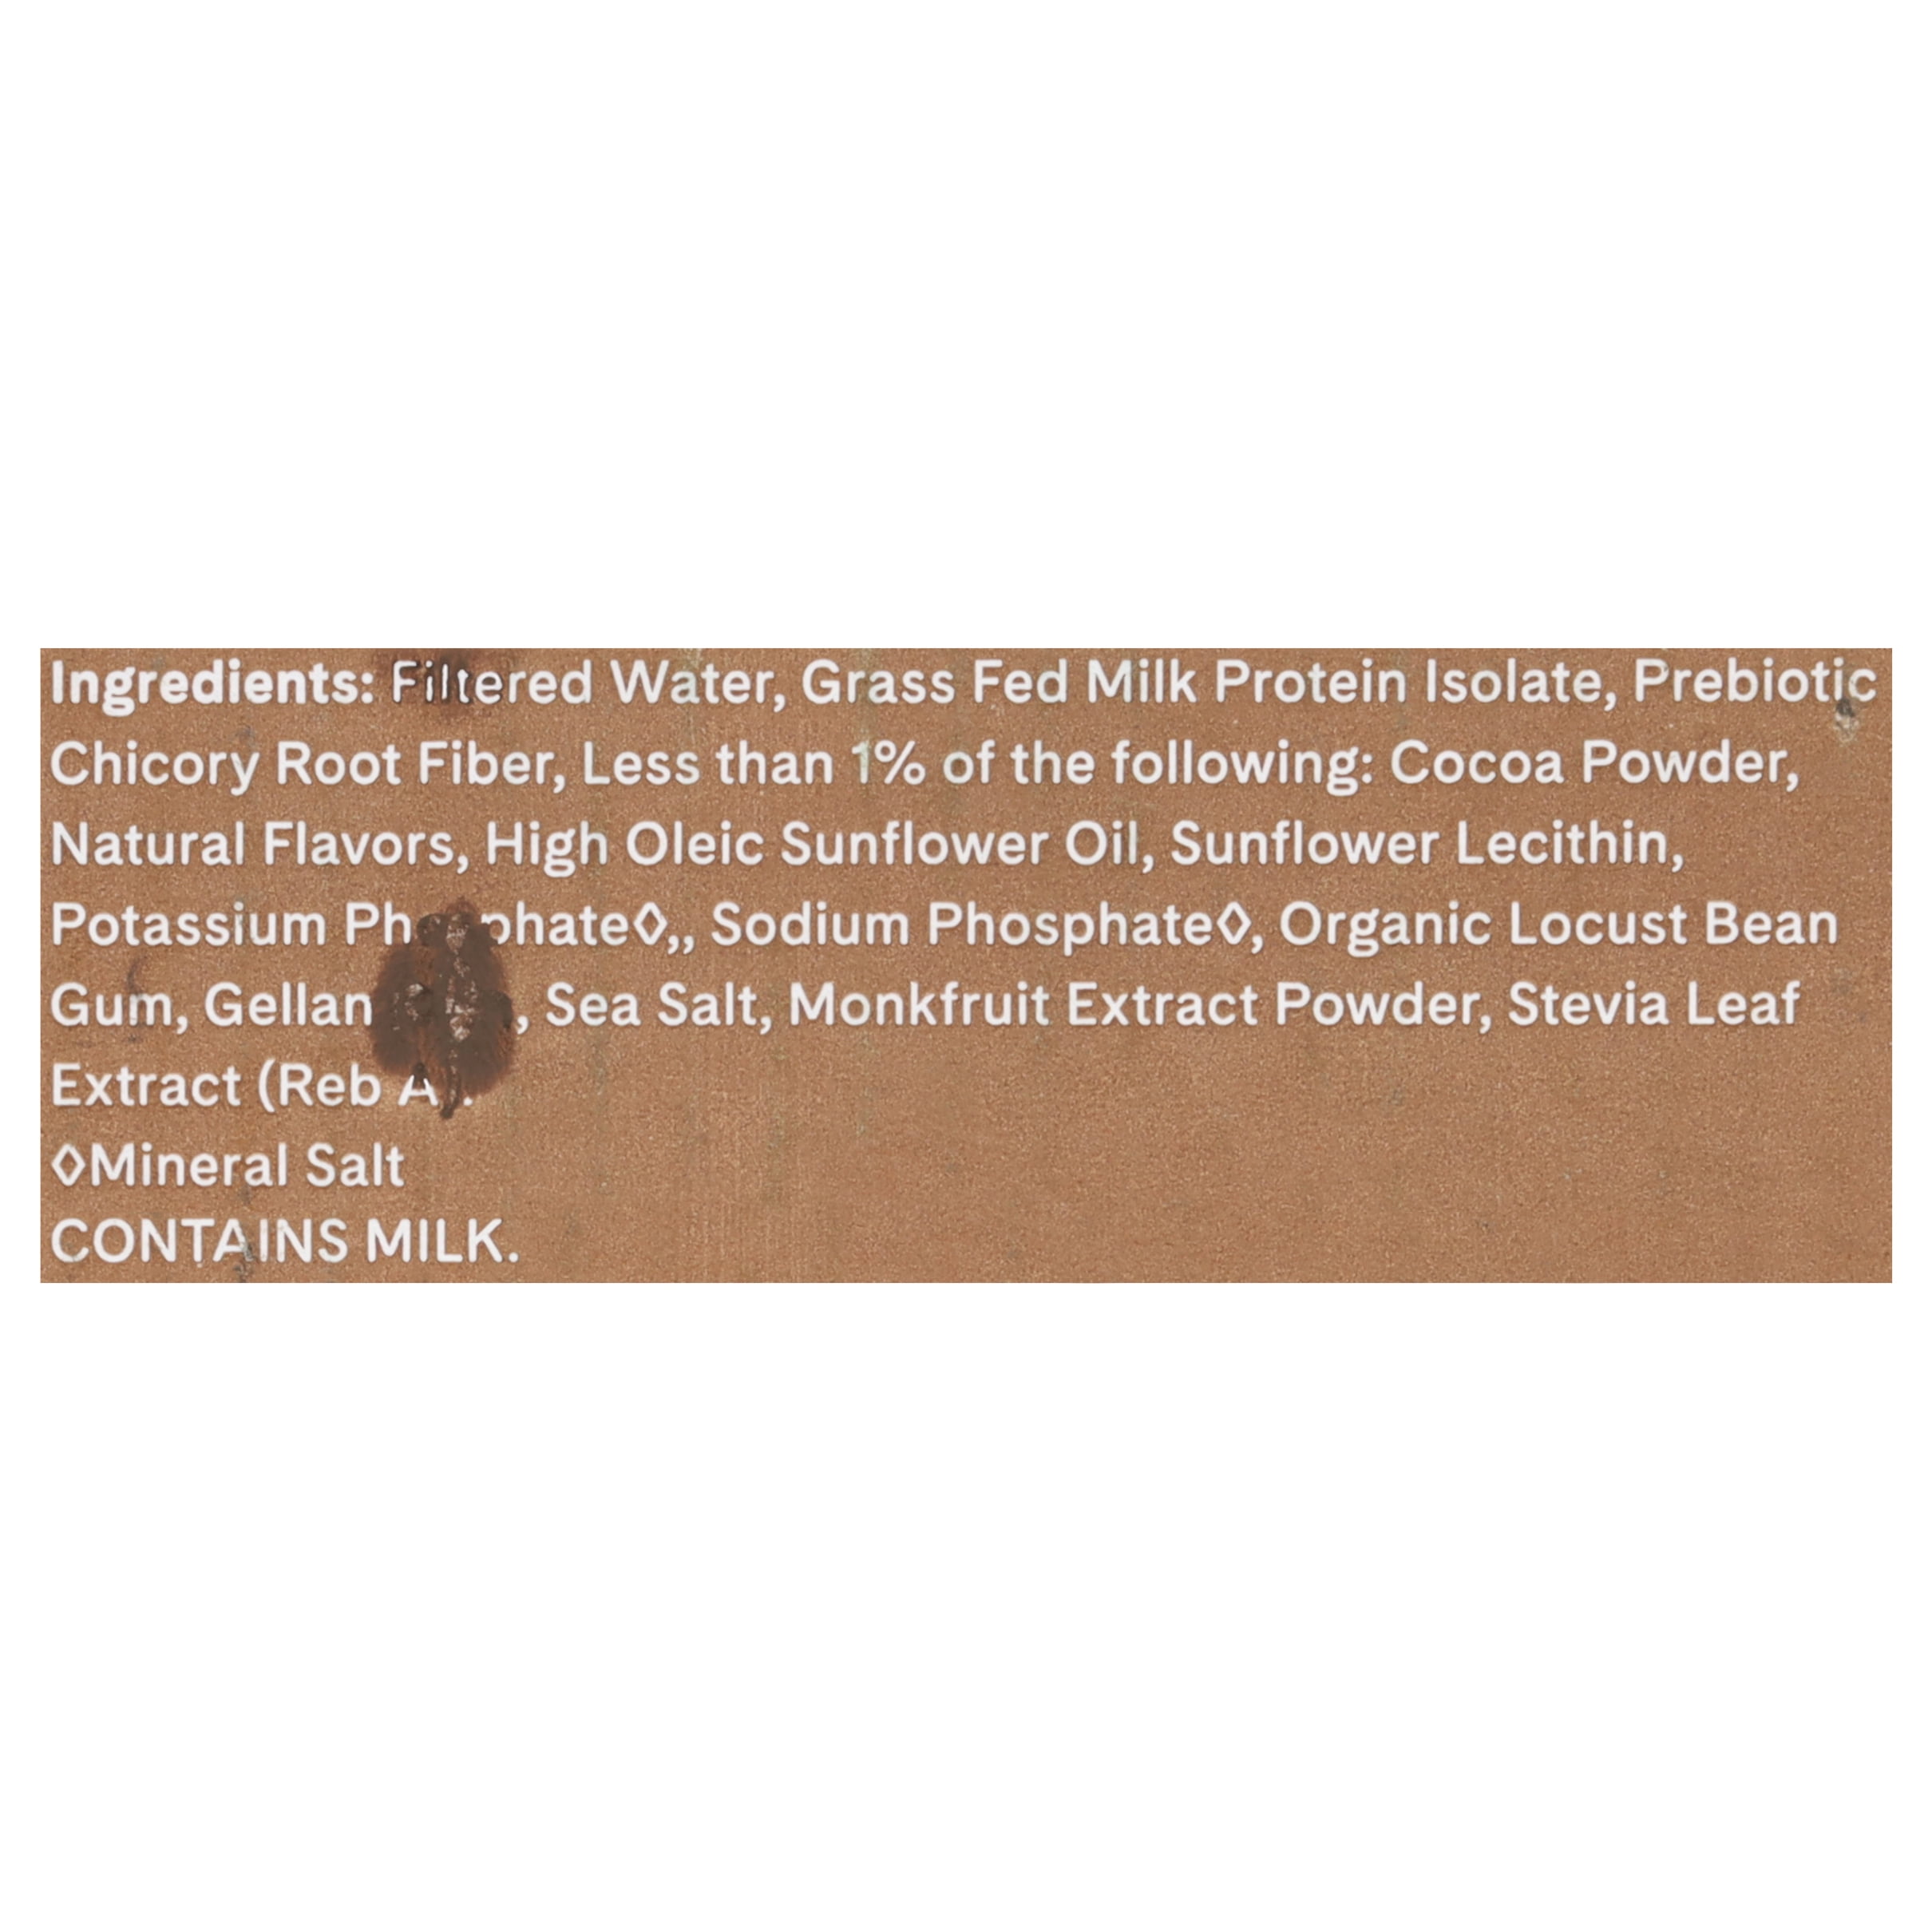 Iconic® Grass Fed Chocolate Truffle Protein Drink, 12 bottles / 11.5 fl oz  - Harris Teeter